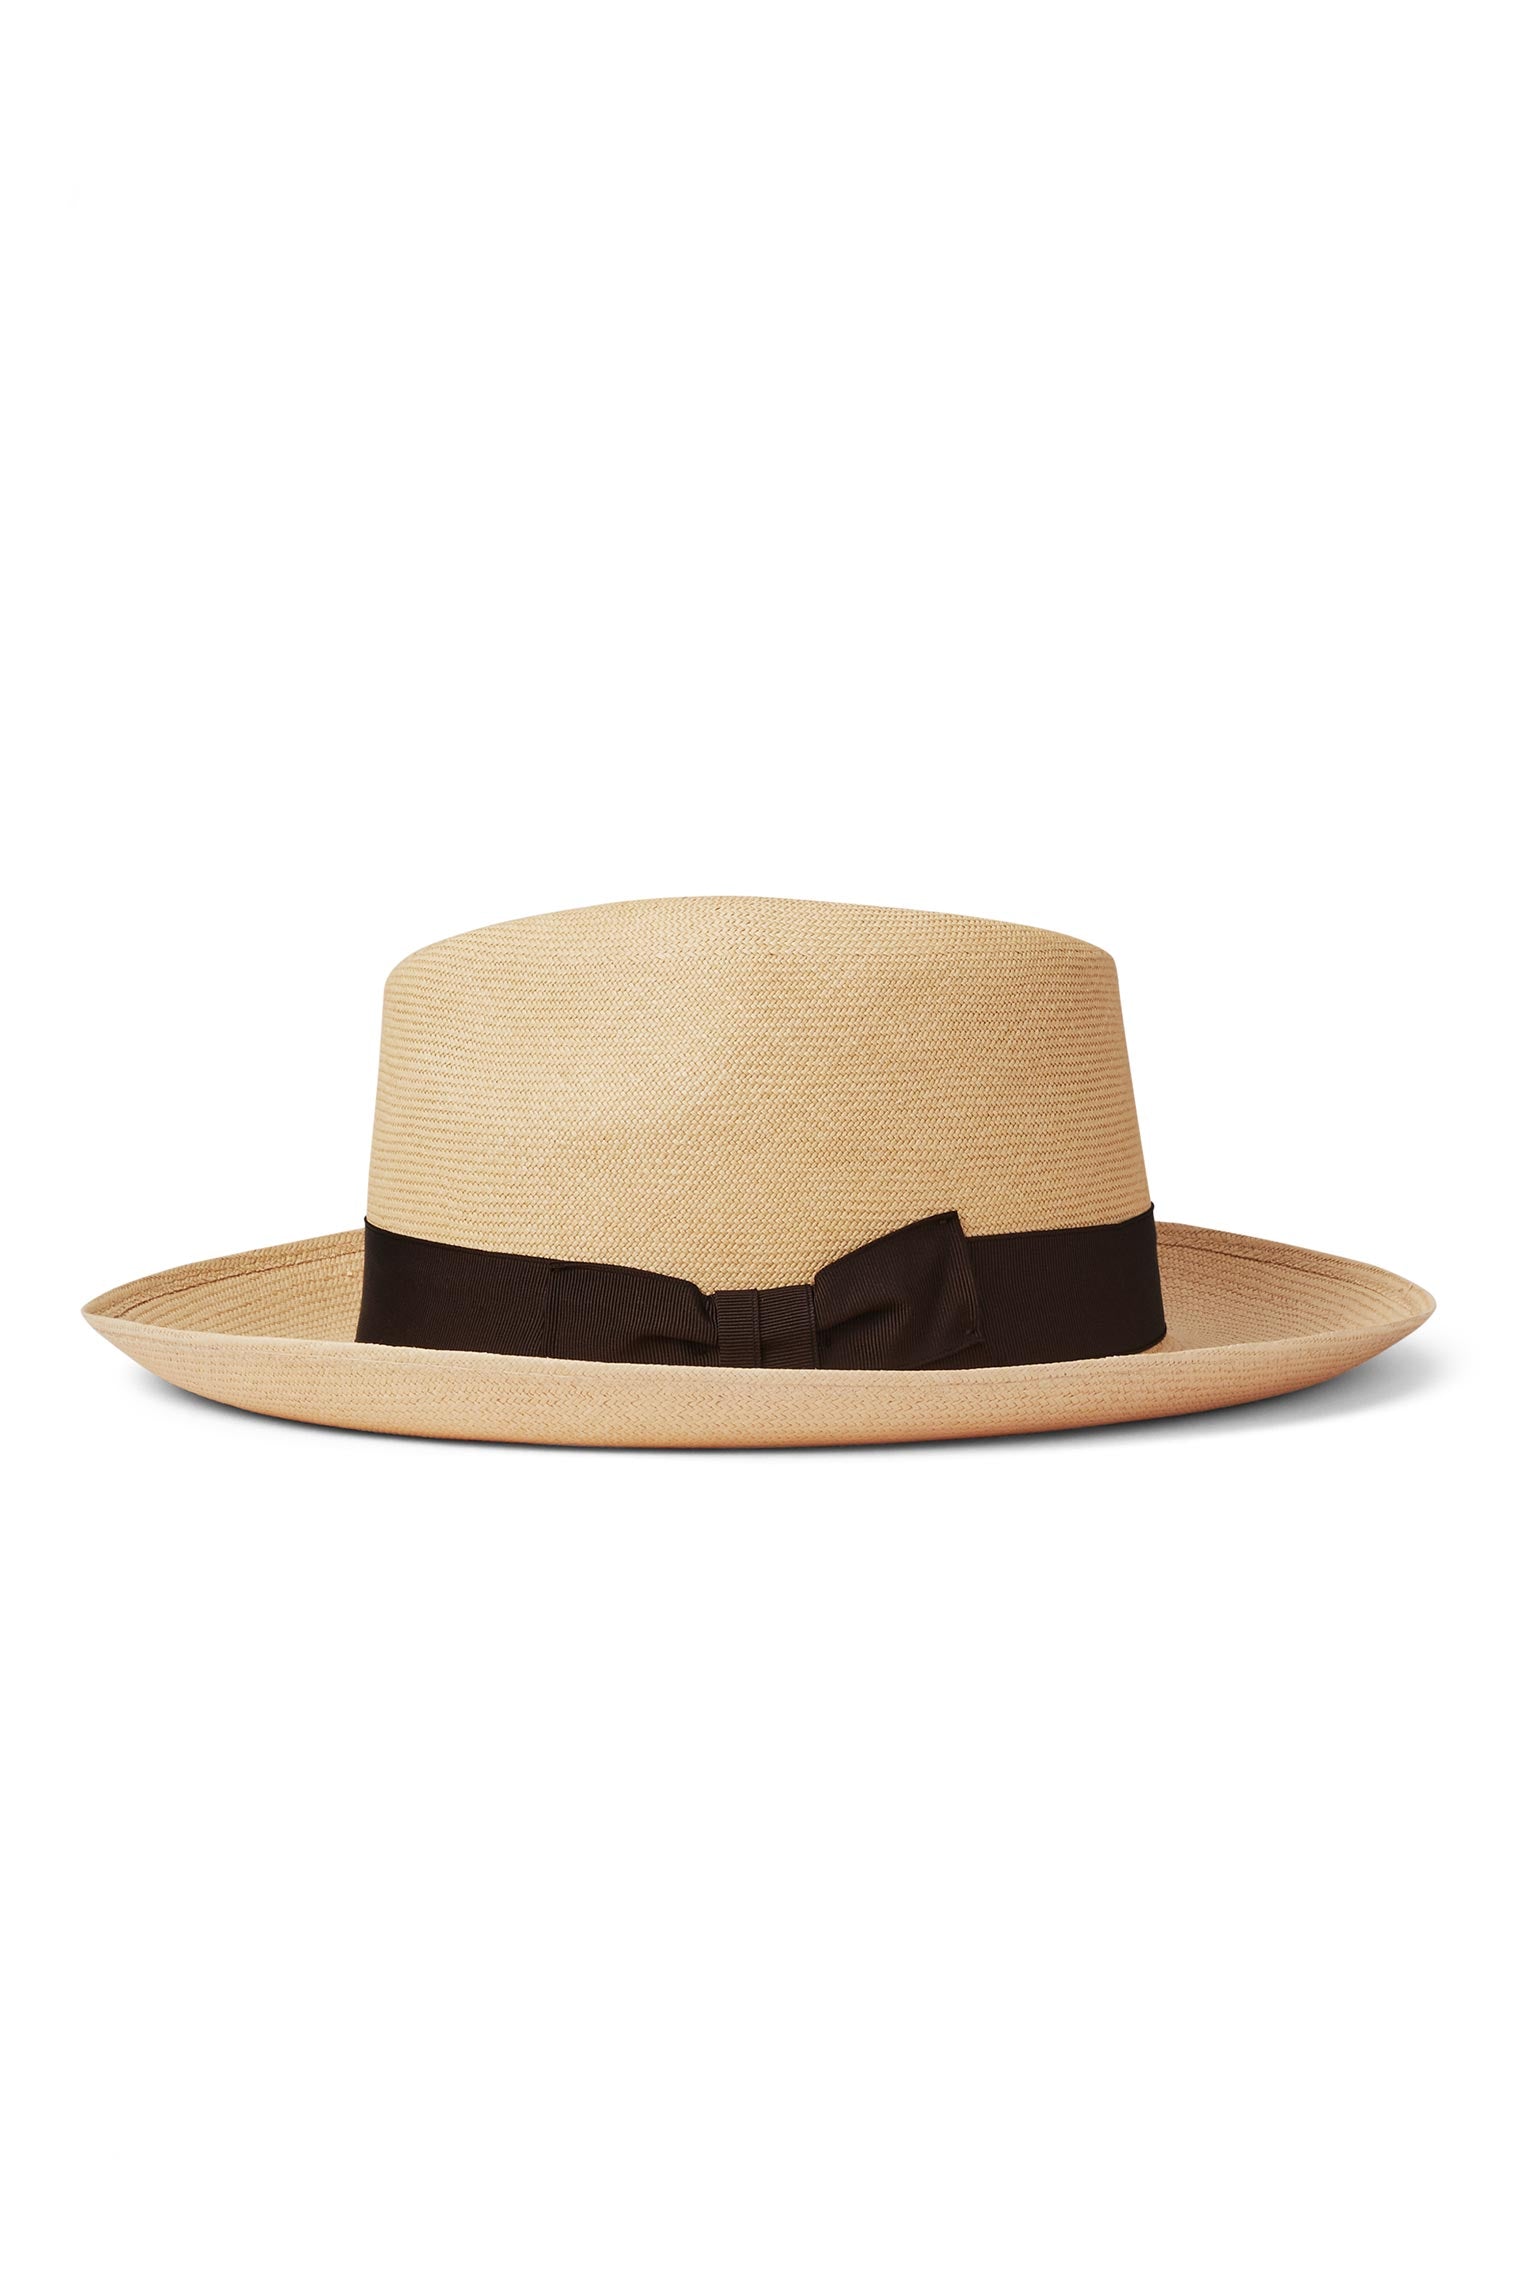 Ventnor Cuenca Ultra-fino Panama - Panama Hats - Lock & Co. Hatters London UK